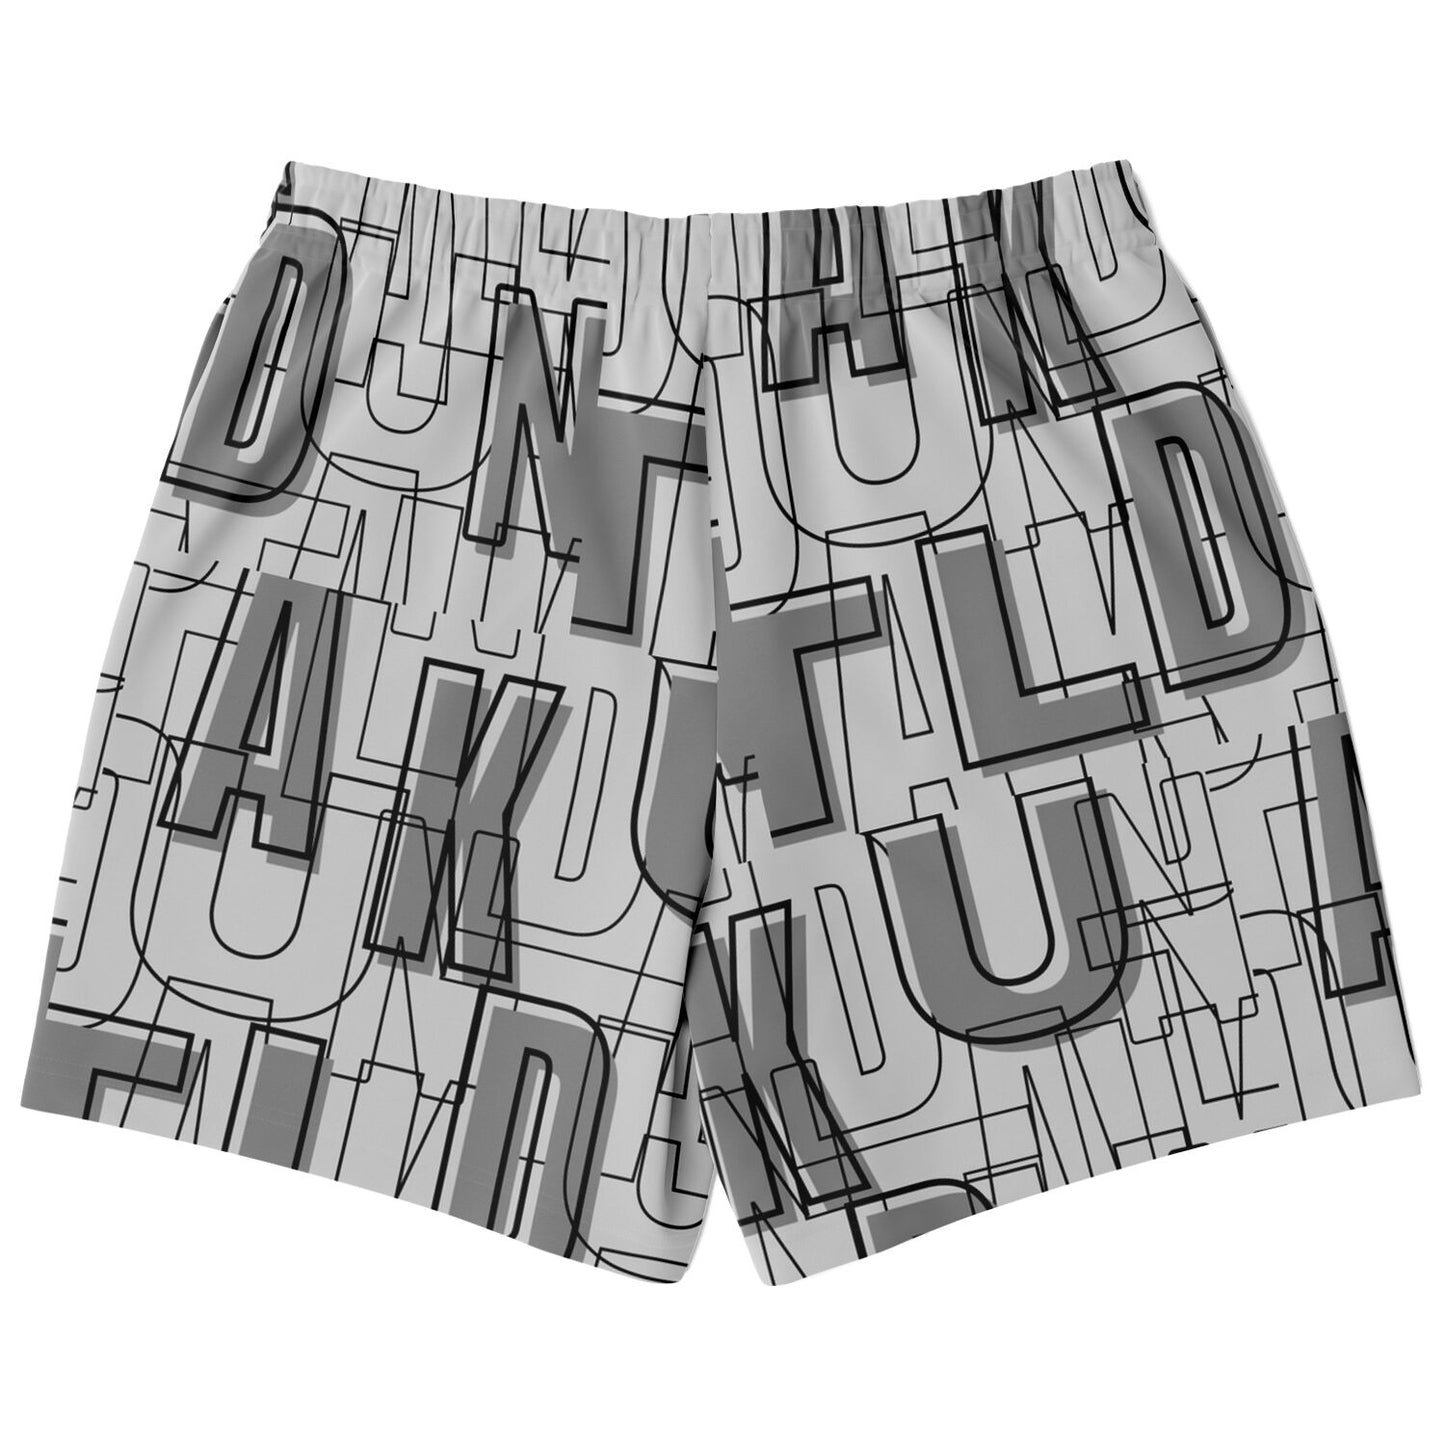 Duntalk "Court Vision" Basketball Mid Shorts - grey